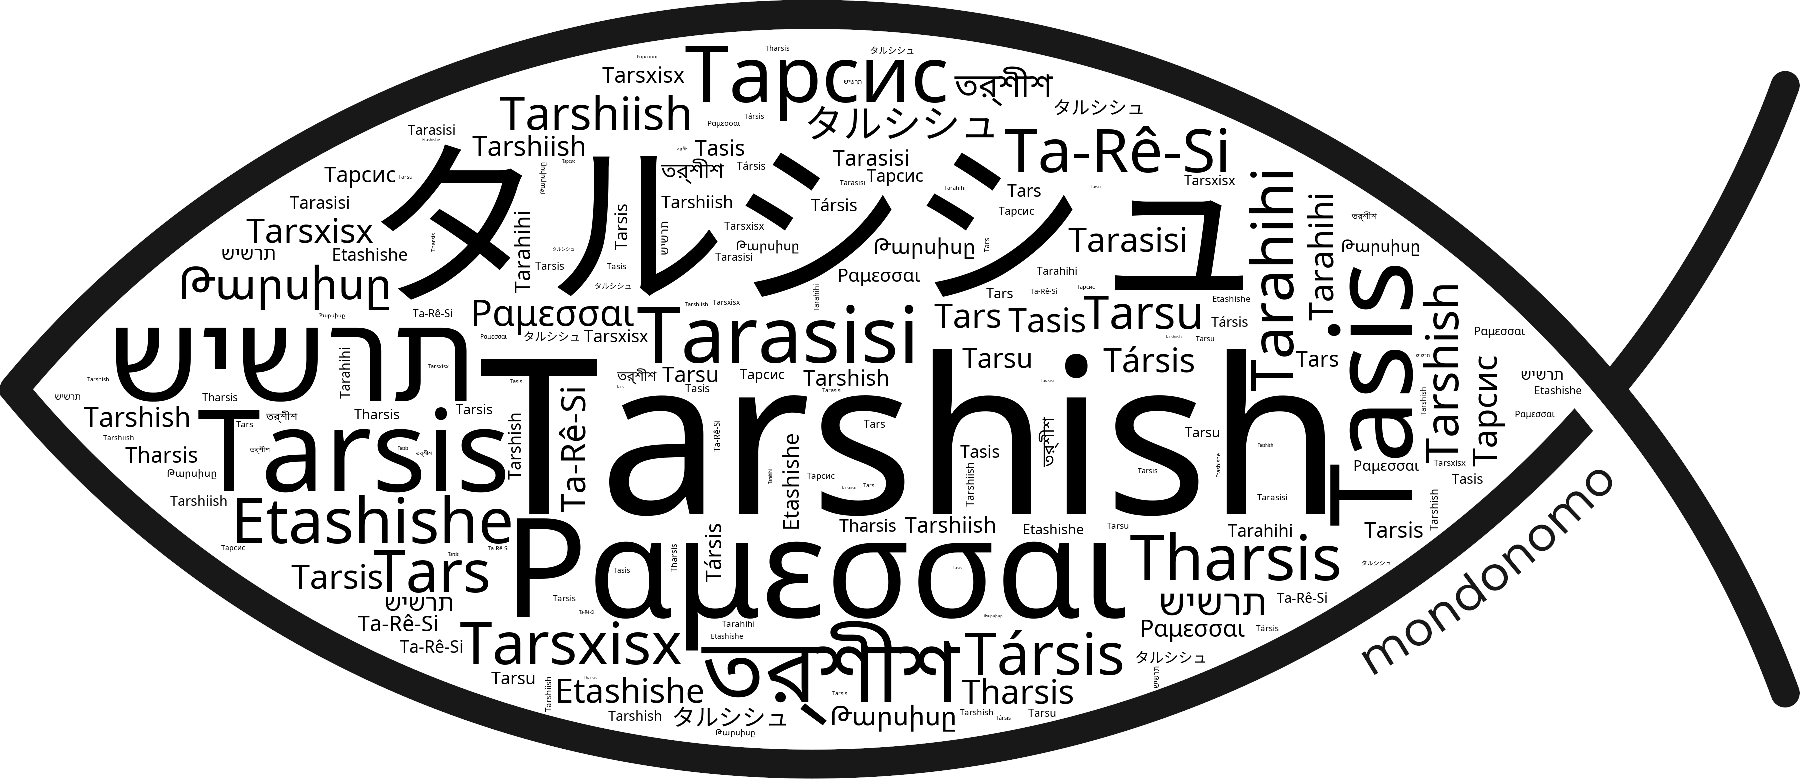 Name Tarshish in the world's Bibles